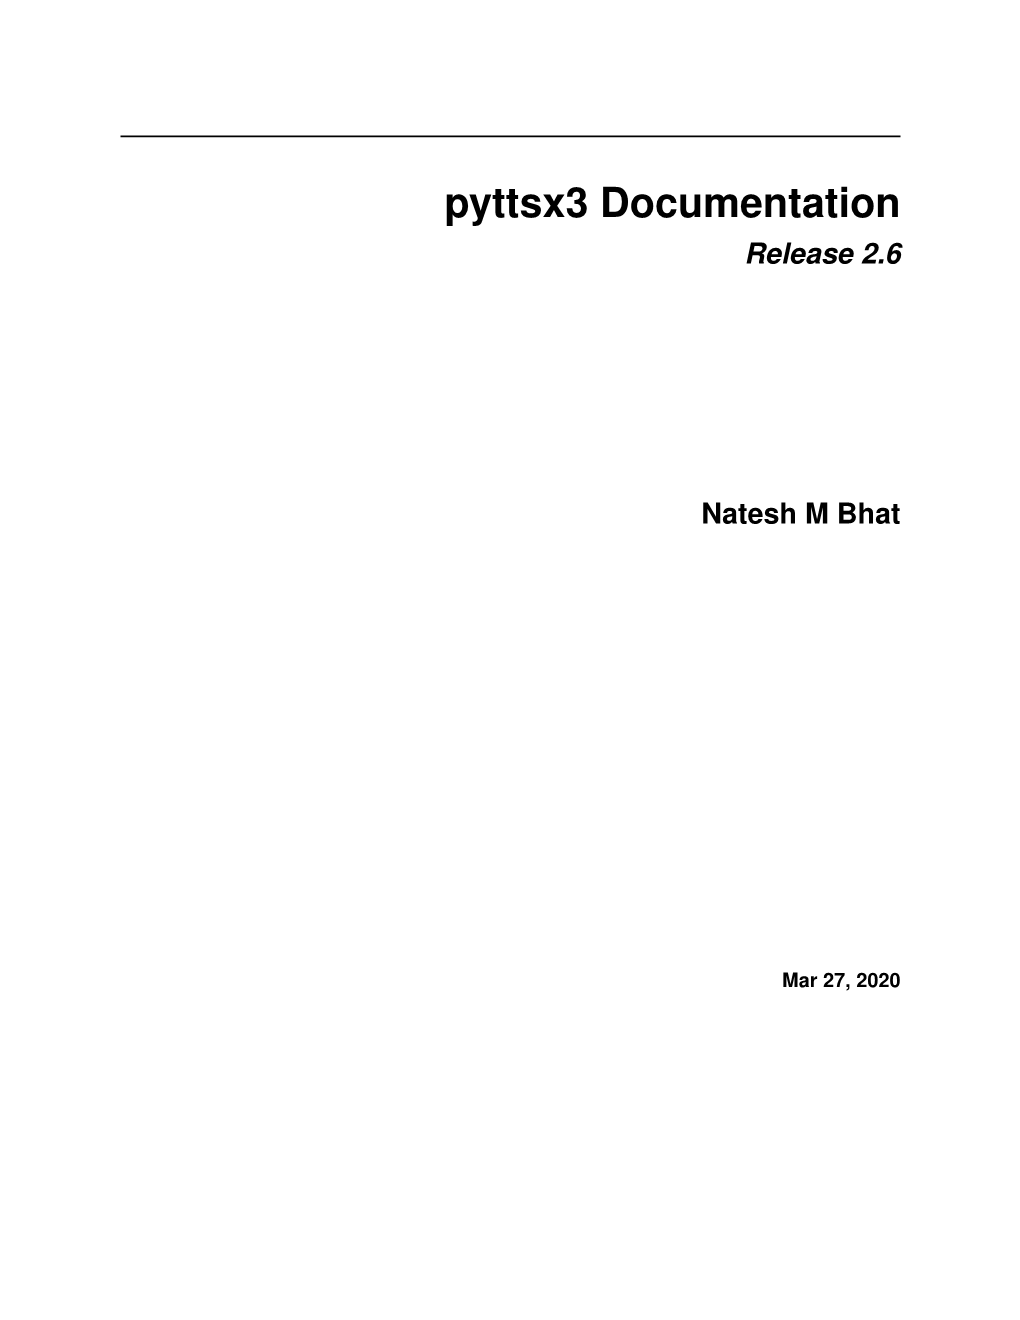 Pyttsx3 Documentation Release 2.6